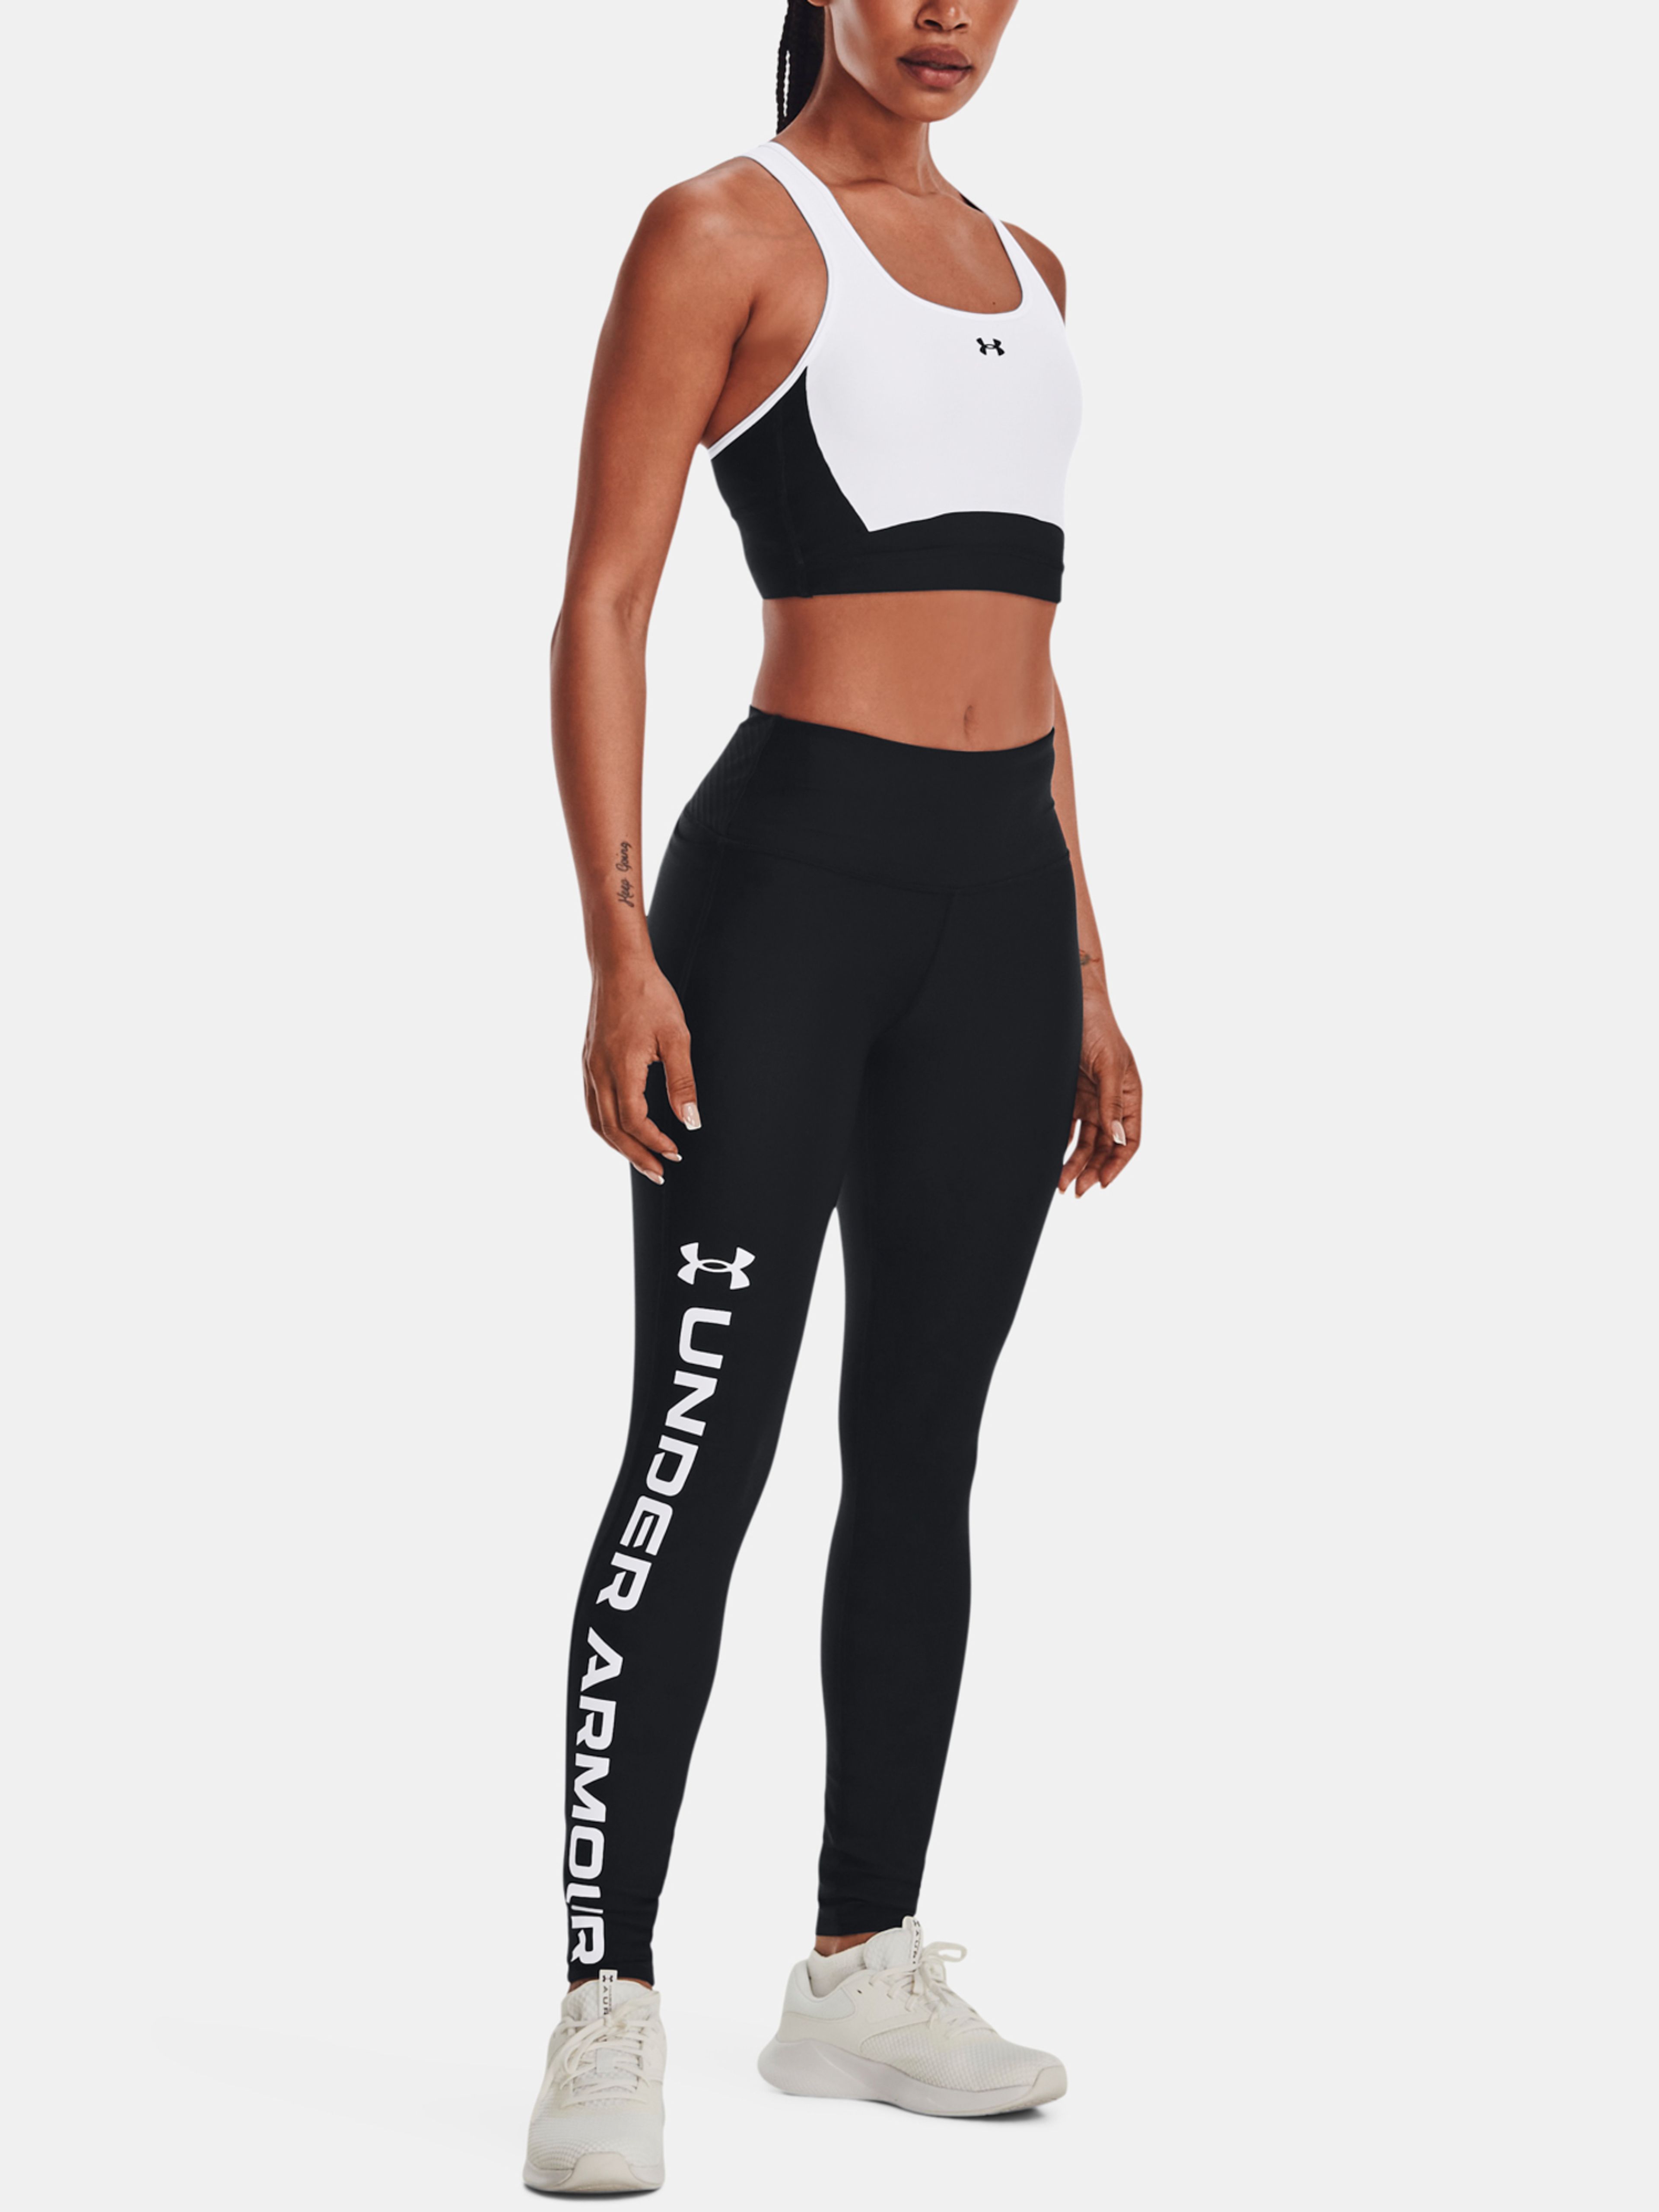  Armour Branded WB Legging, Black - women's compression  leggings - UNDER ARMOUR - 39.52 € - outdoorové oblečení a vybavení shop